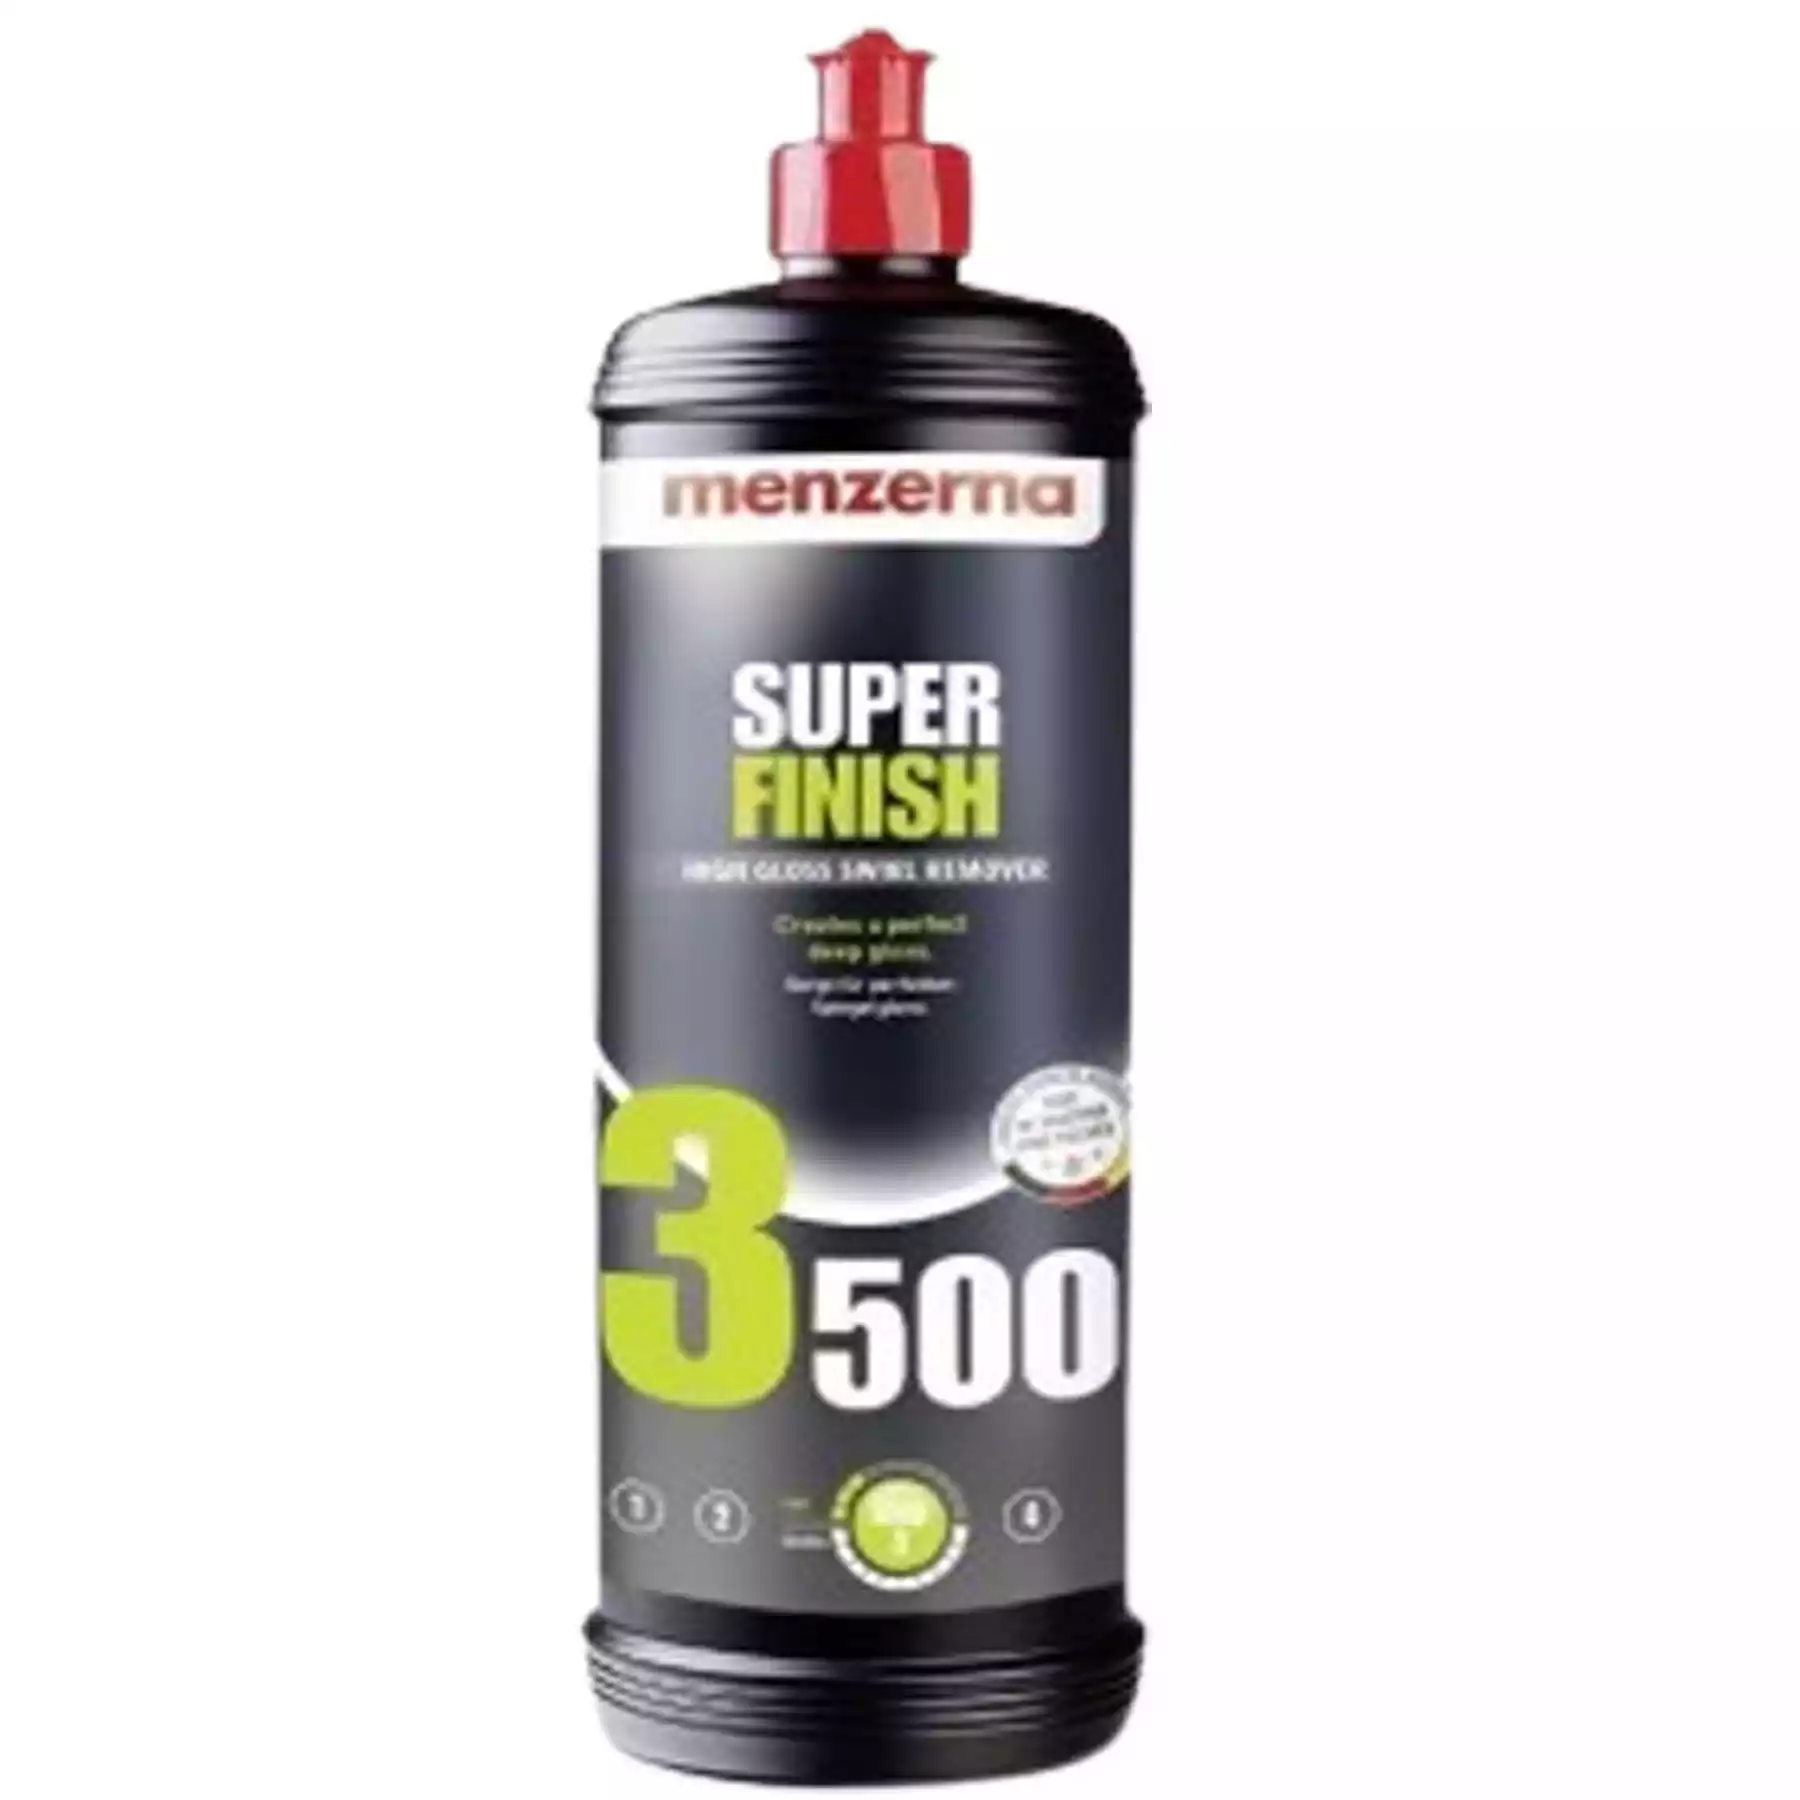 Menzerna Super Finish 3500